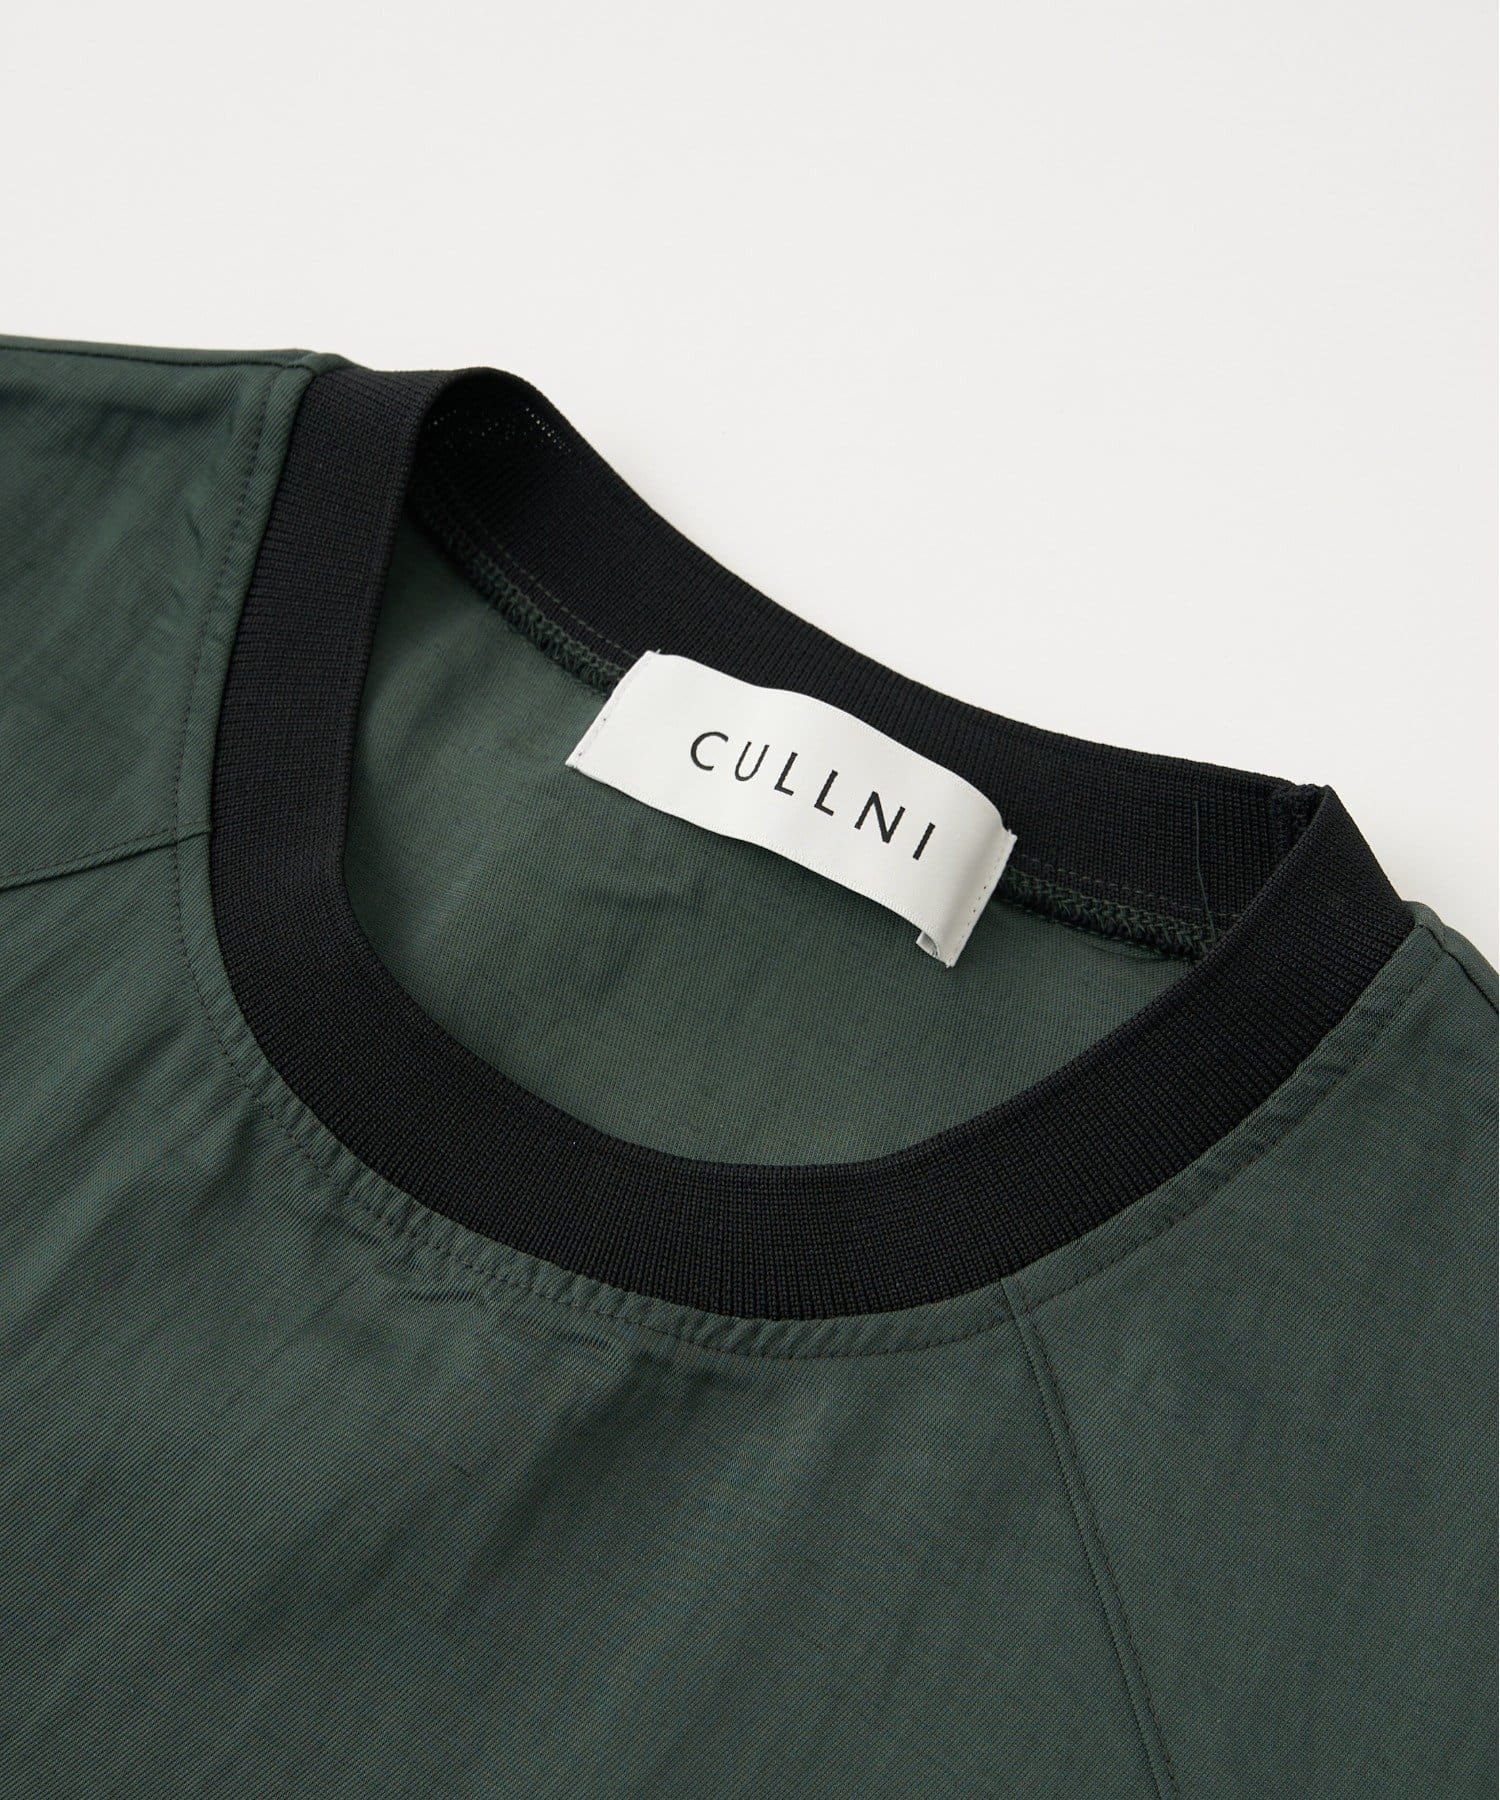 Lui's(ルイス) 【CULLNI】24SS exclusive CPOデザインプルオーバー